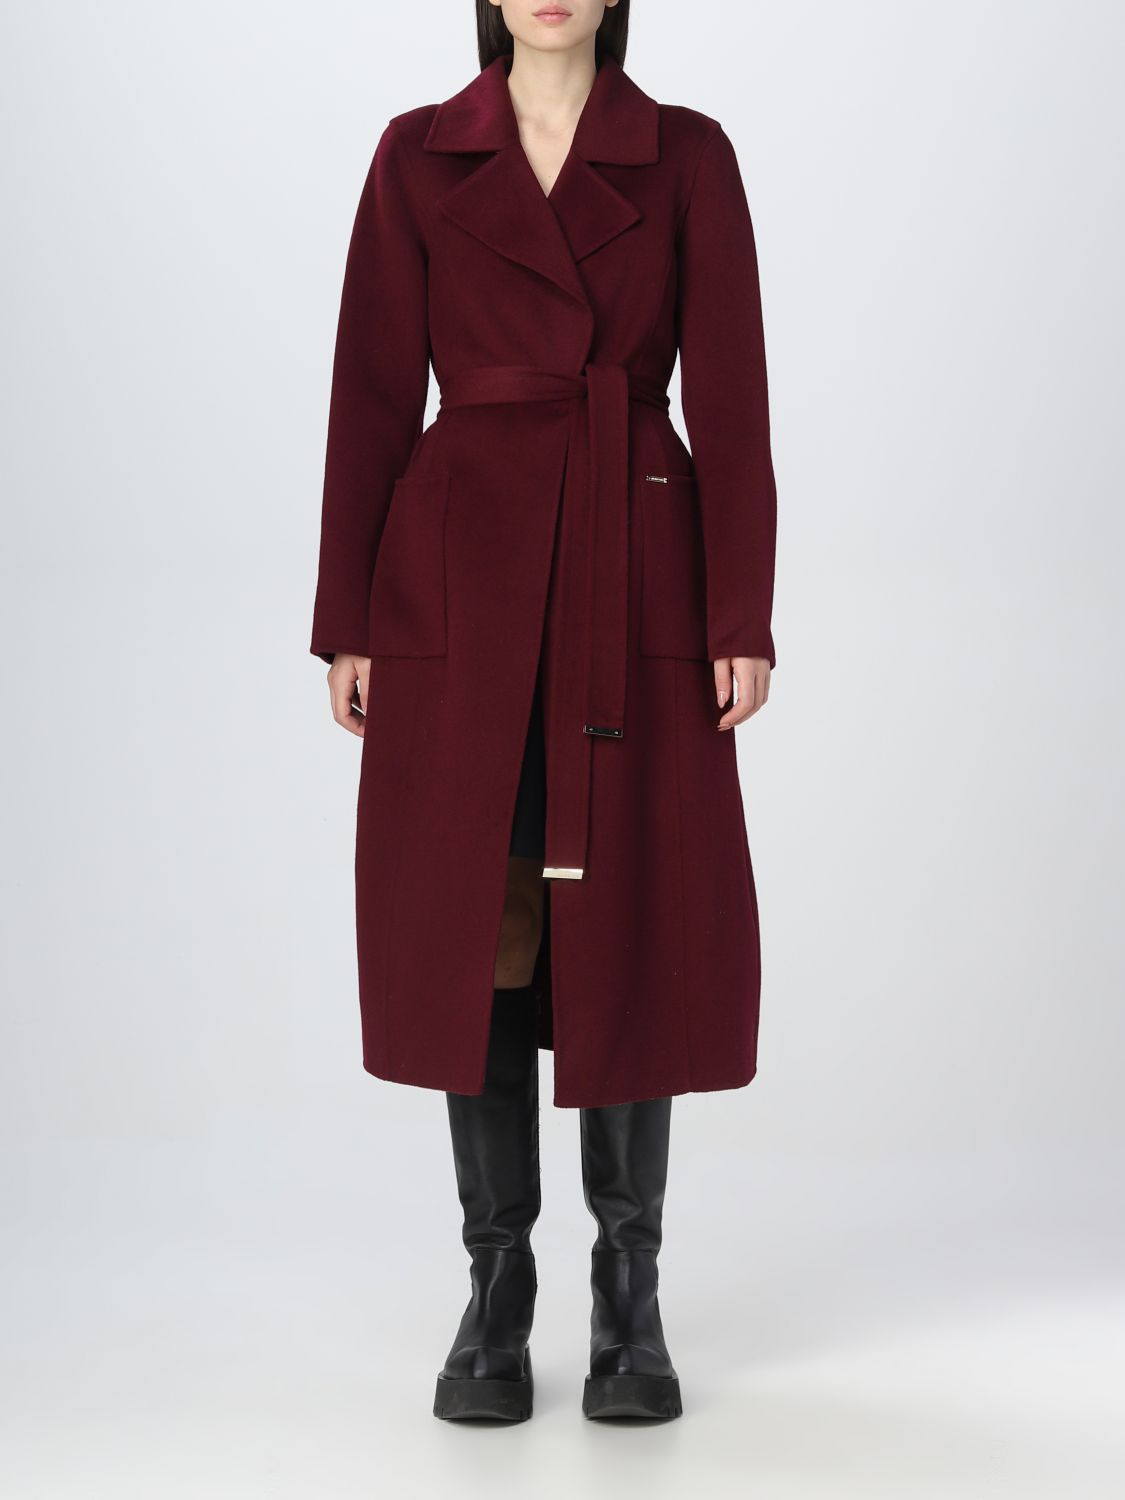 Michael Kors Outlet: coat for woman - Burgundy | Michael Kors coat  77Q5935M22 online on 